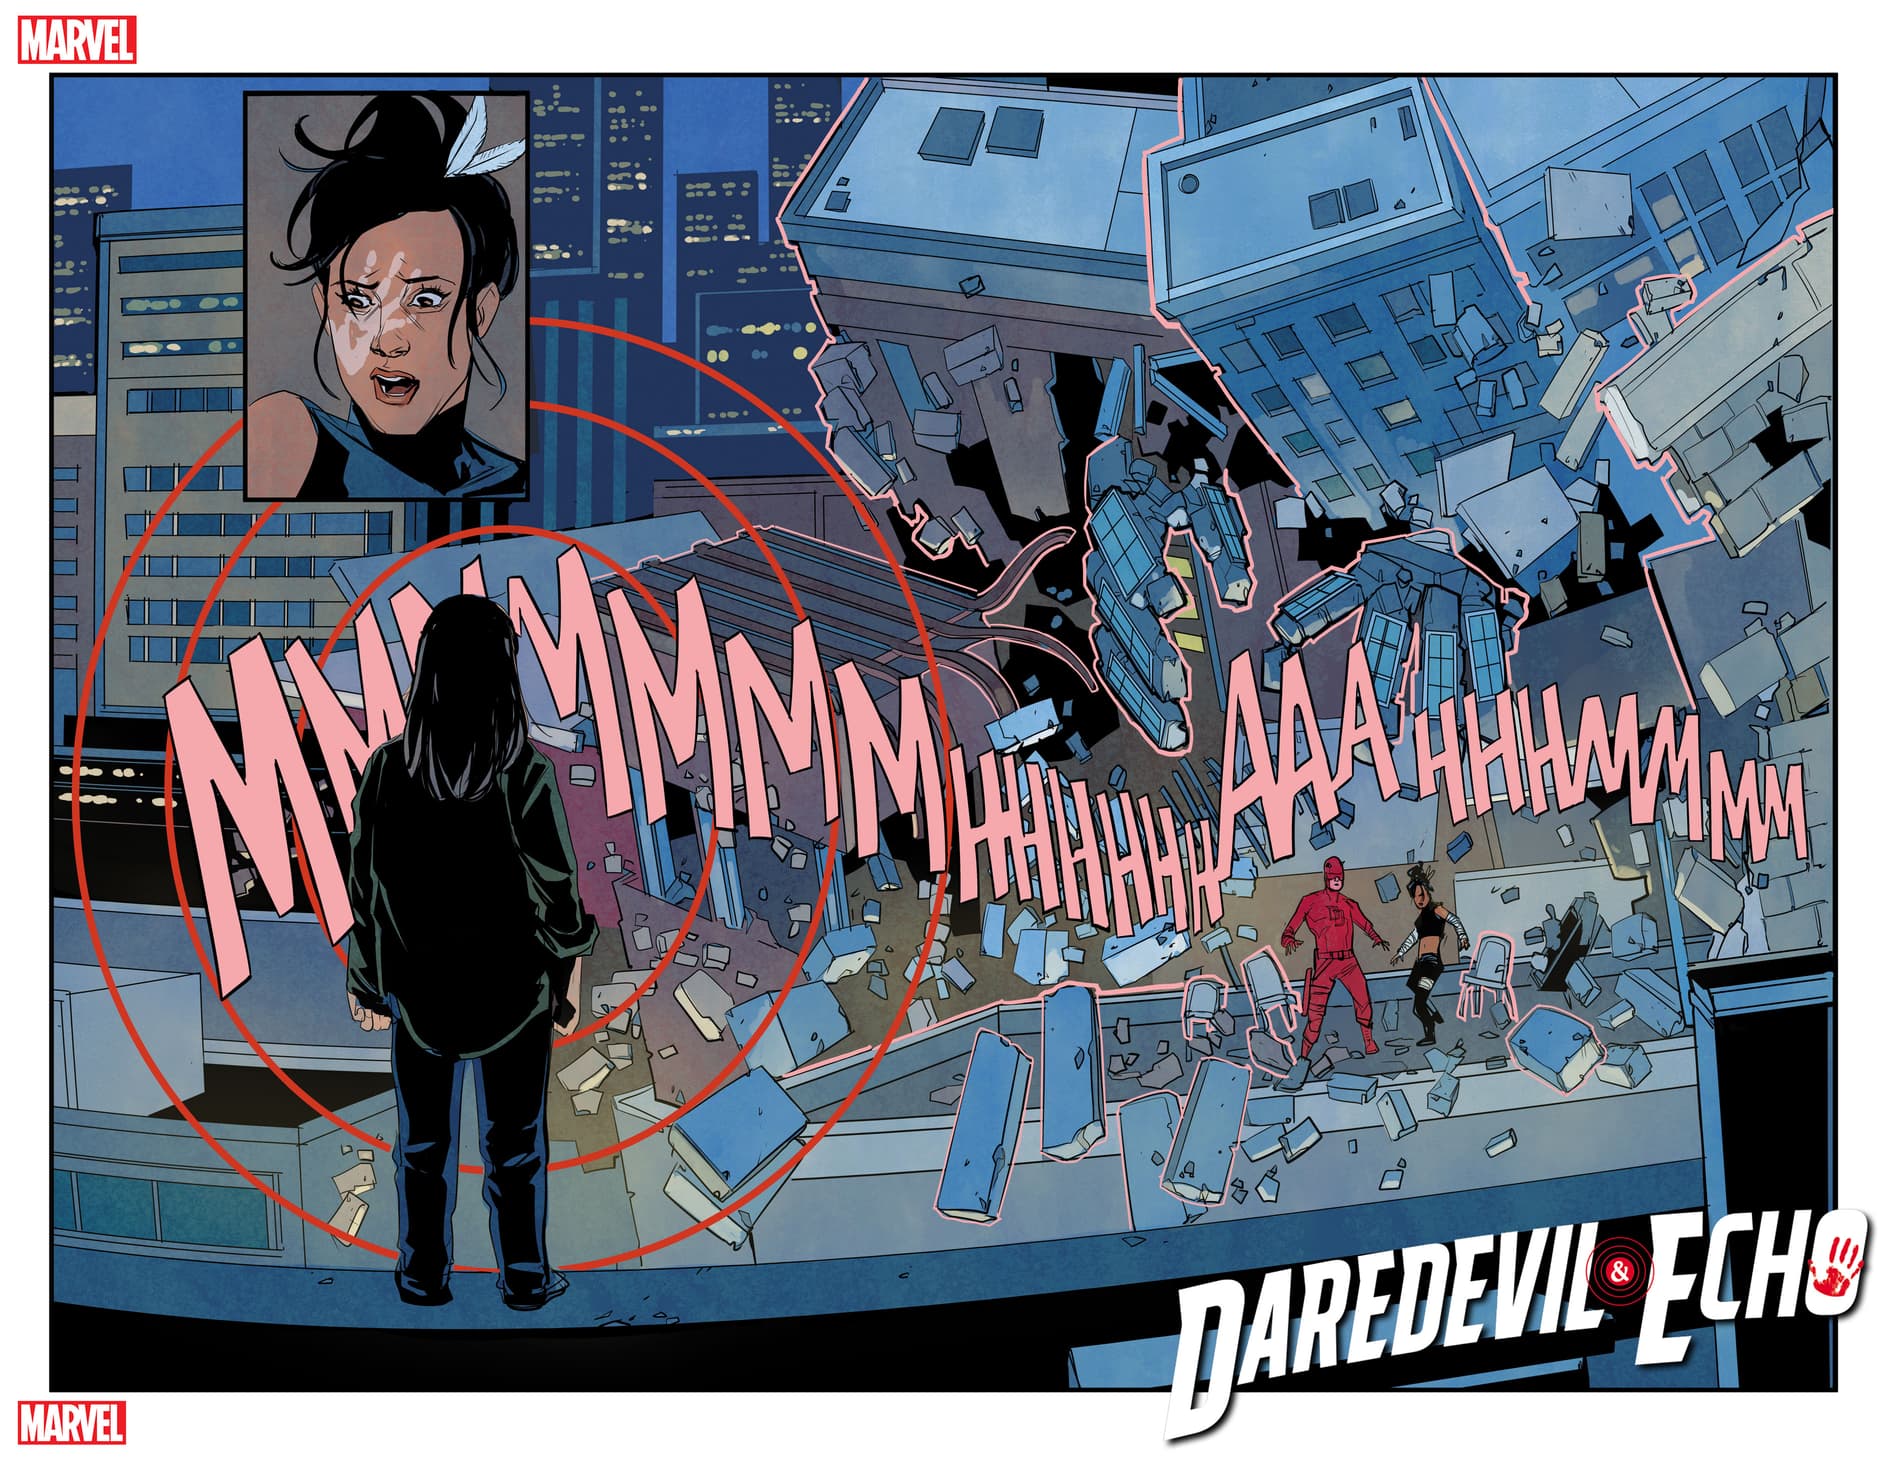 Daredevil & Echo #1 artwork by Phil Noto